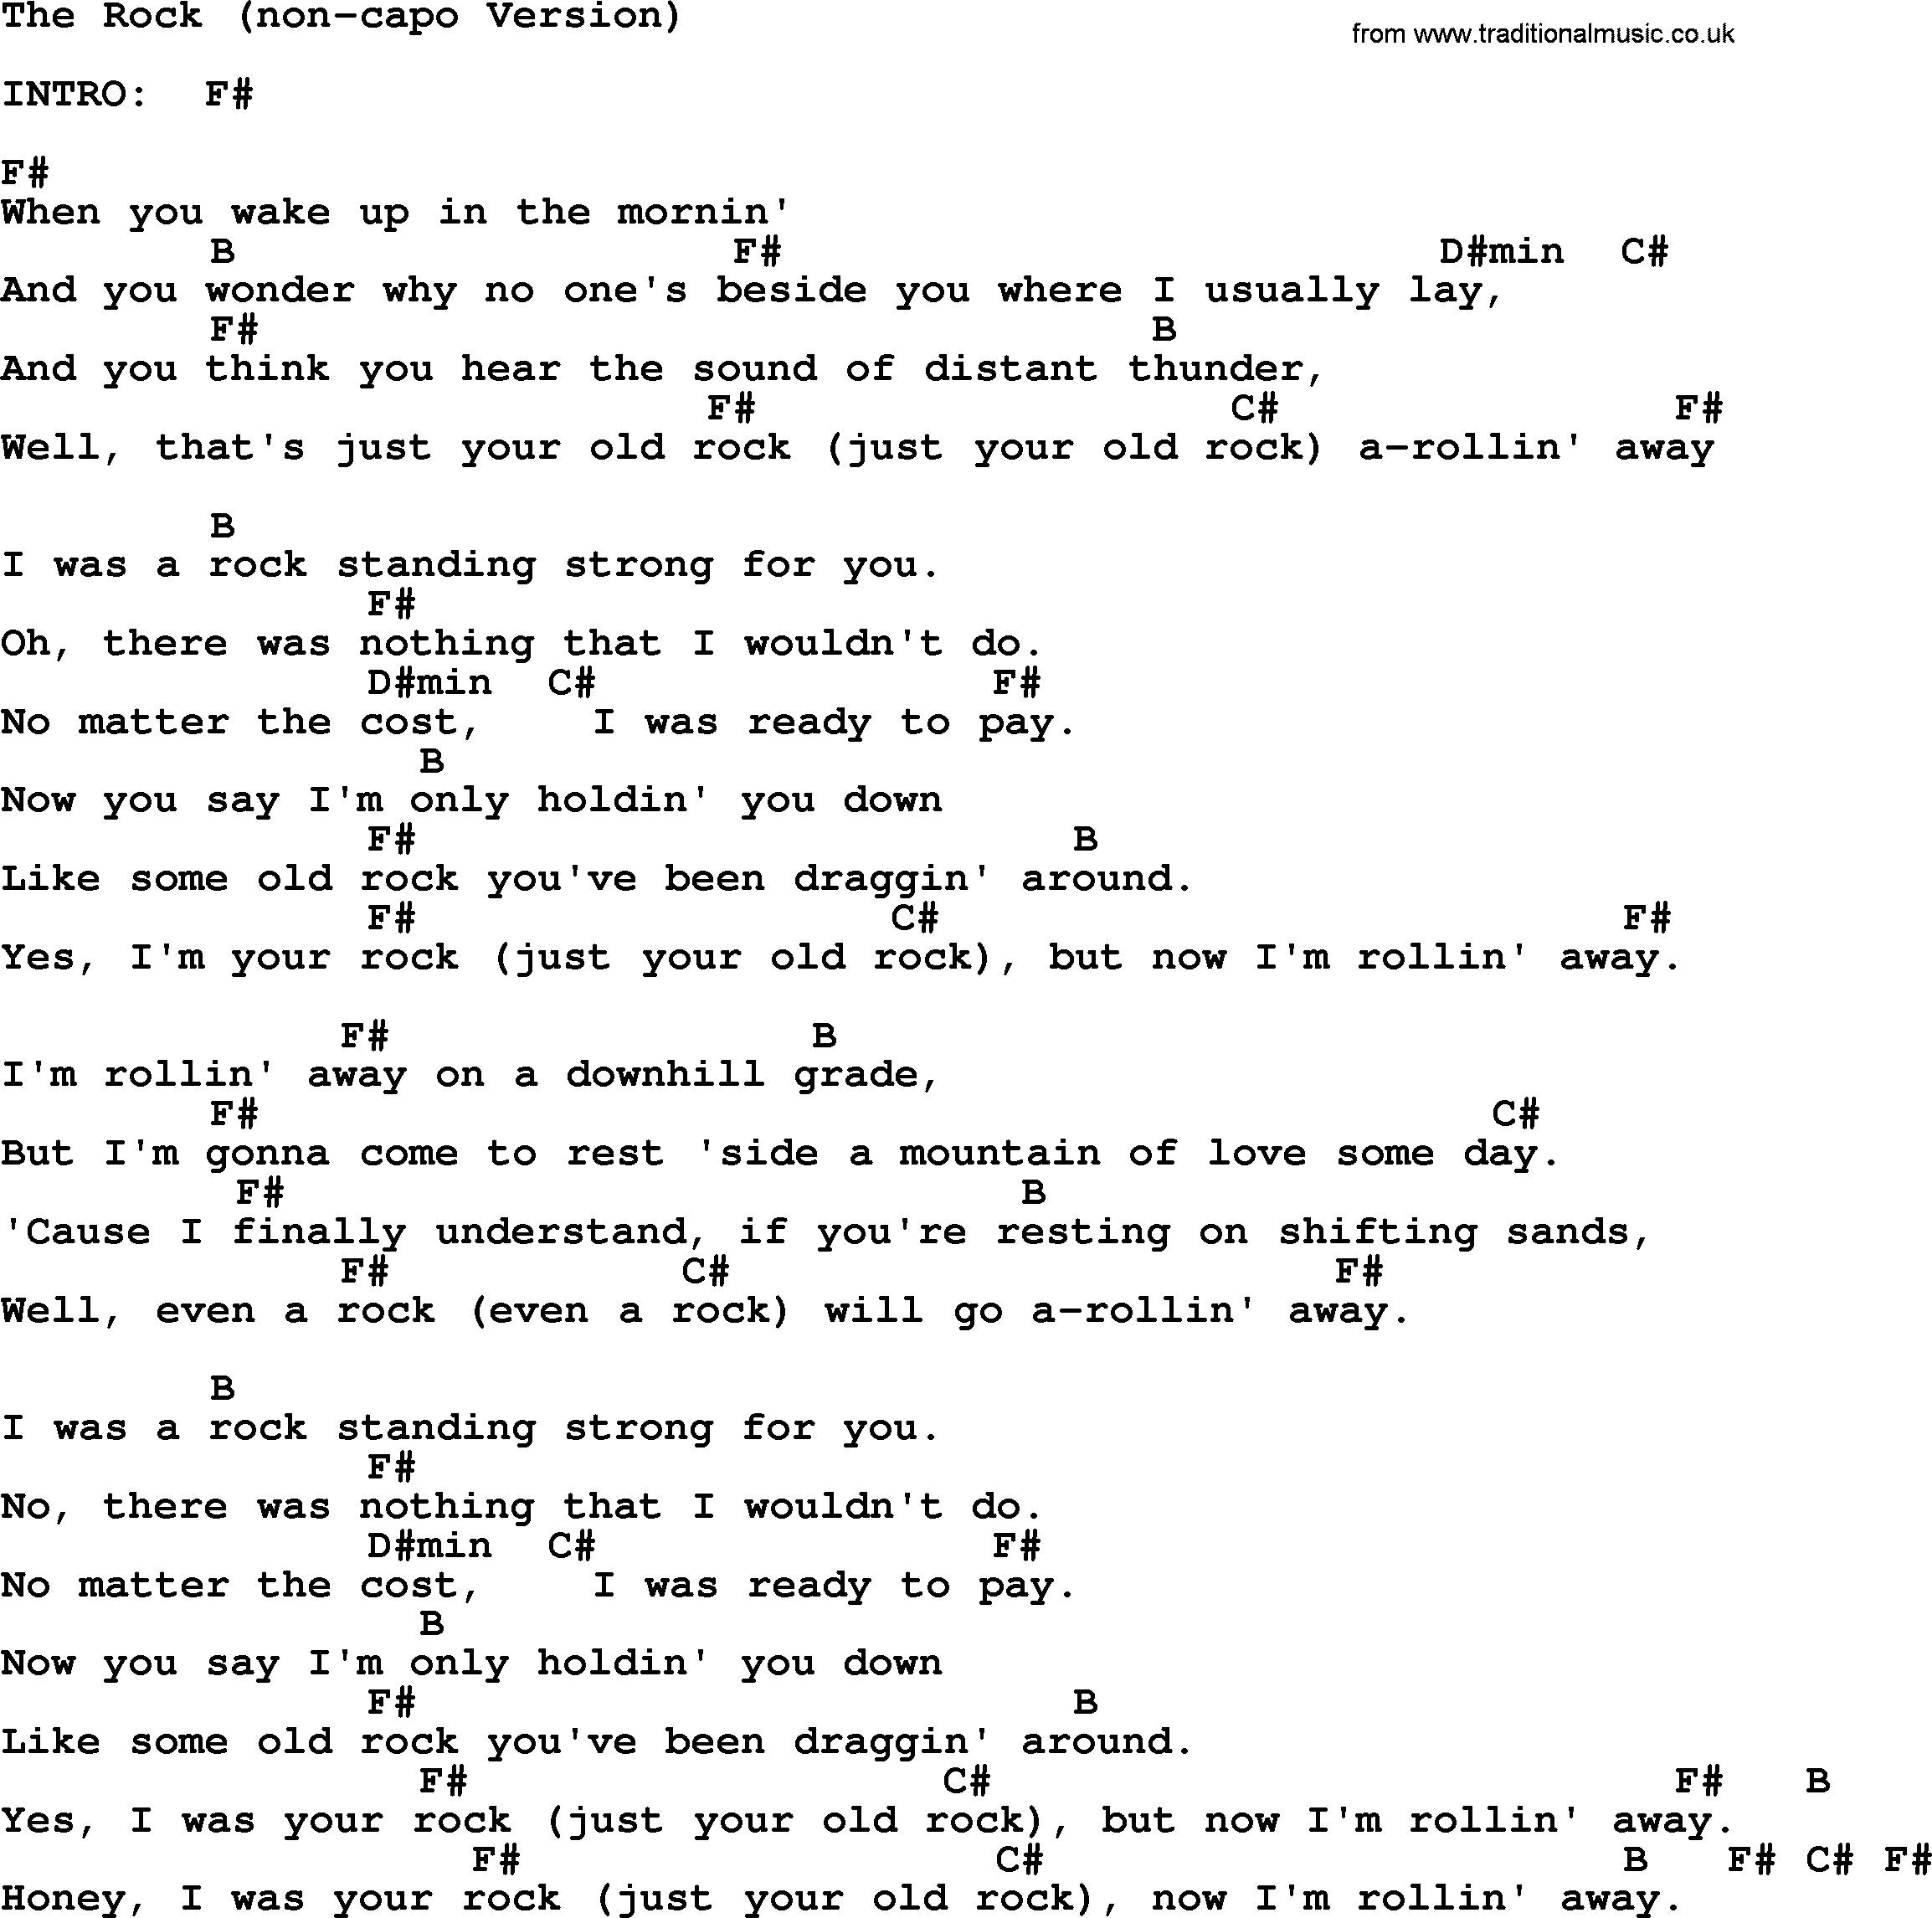 George Jones song: The Rock (non-capo Version), lyrics and chords